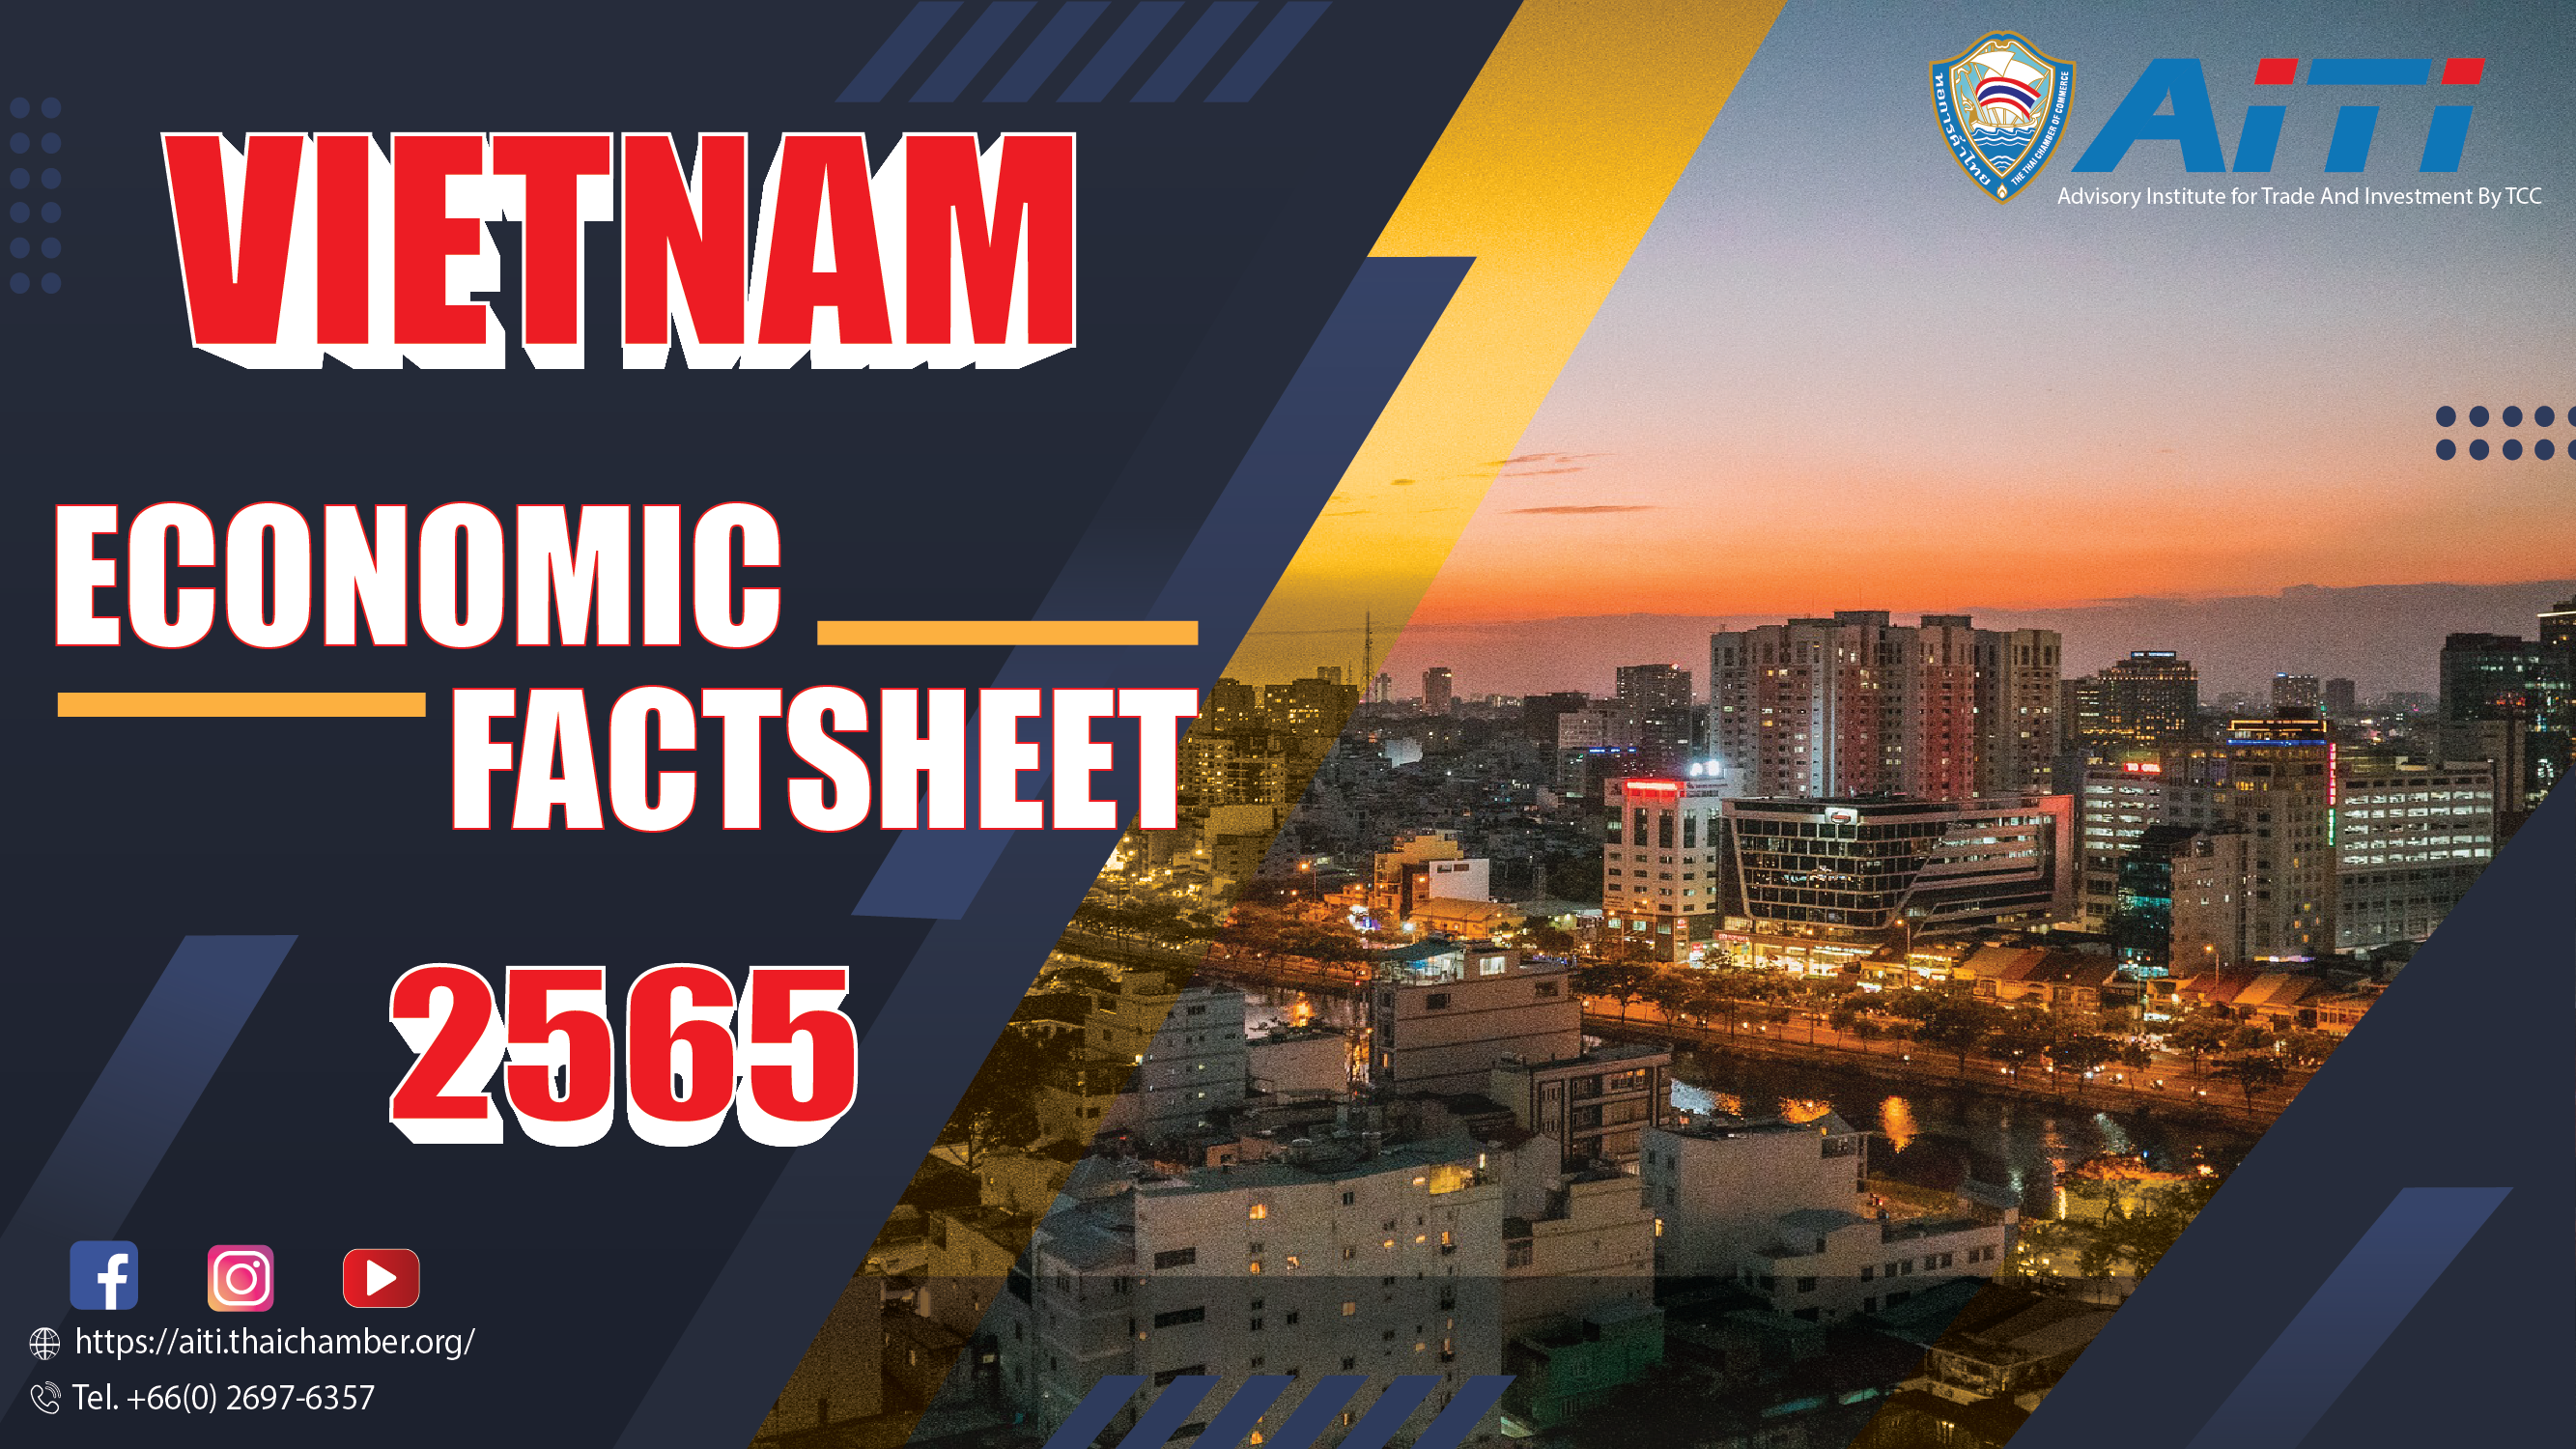 Vietnam Economic Factsheet : 2565